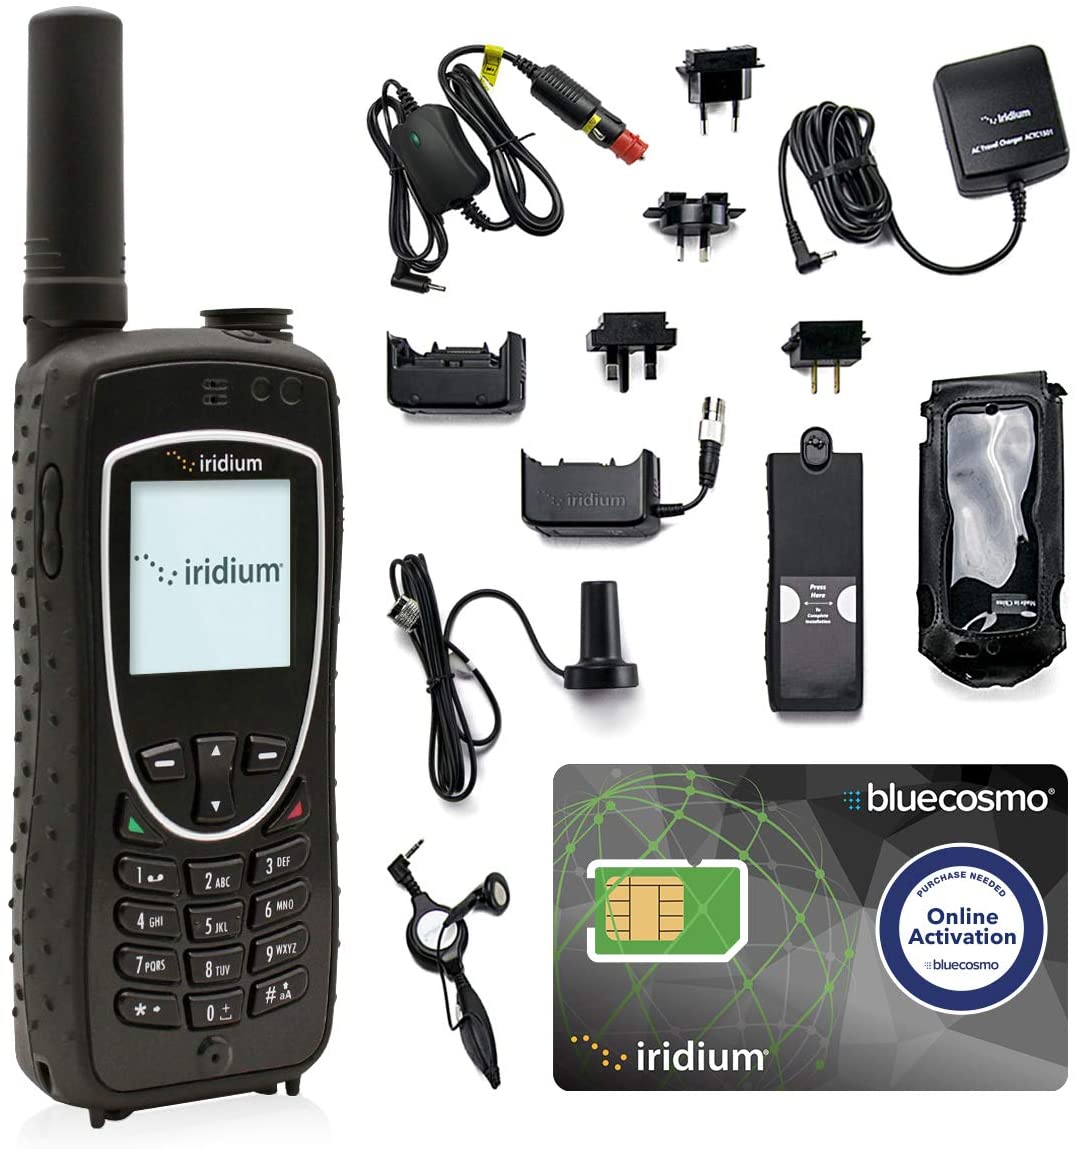 BlueCosmo Iridium Extreme Satellite Phone